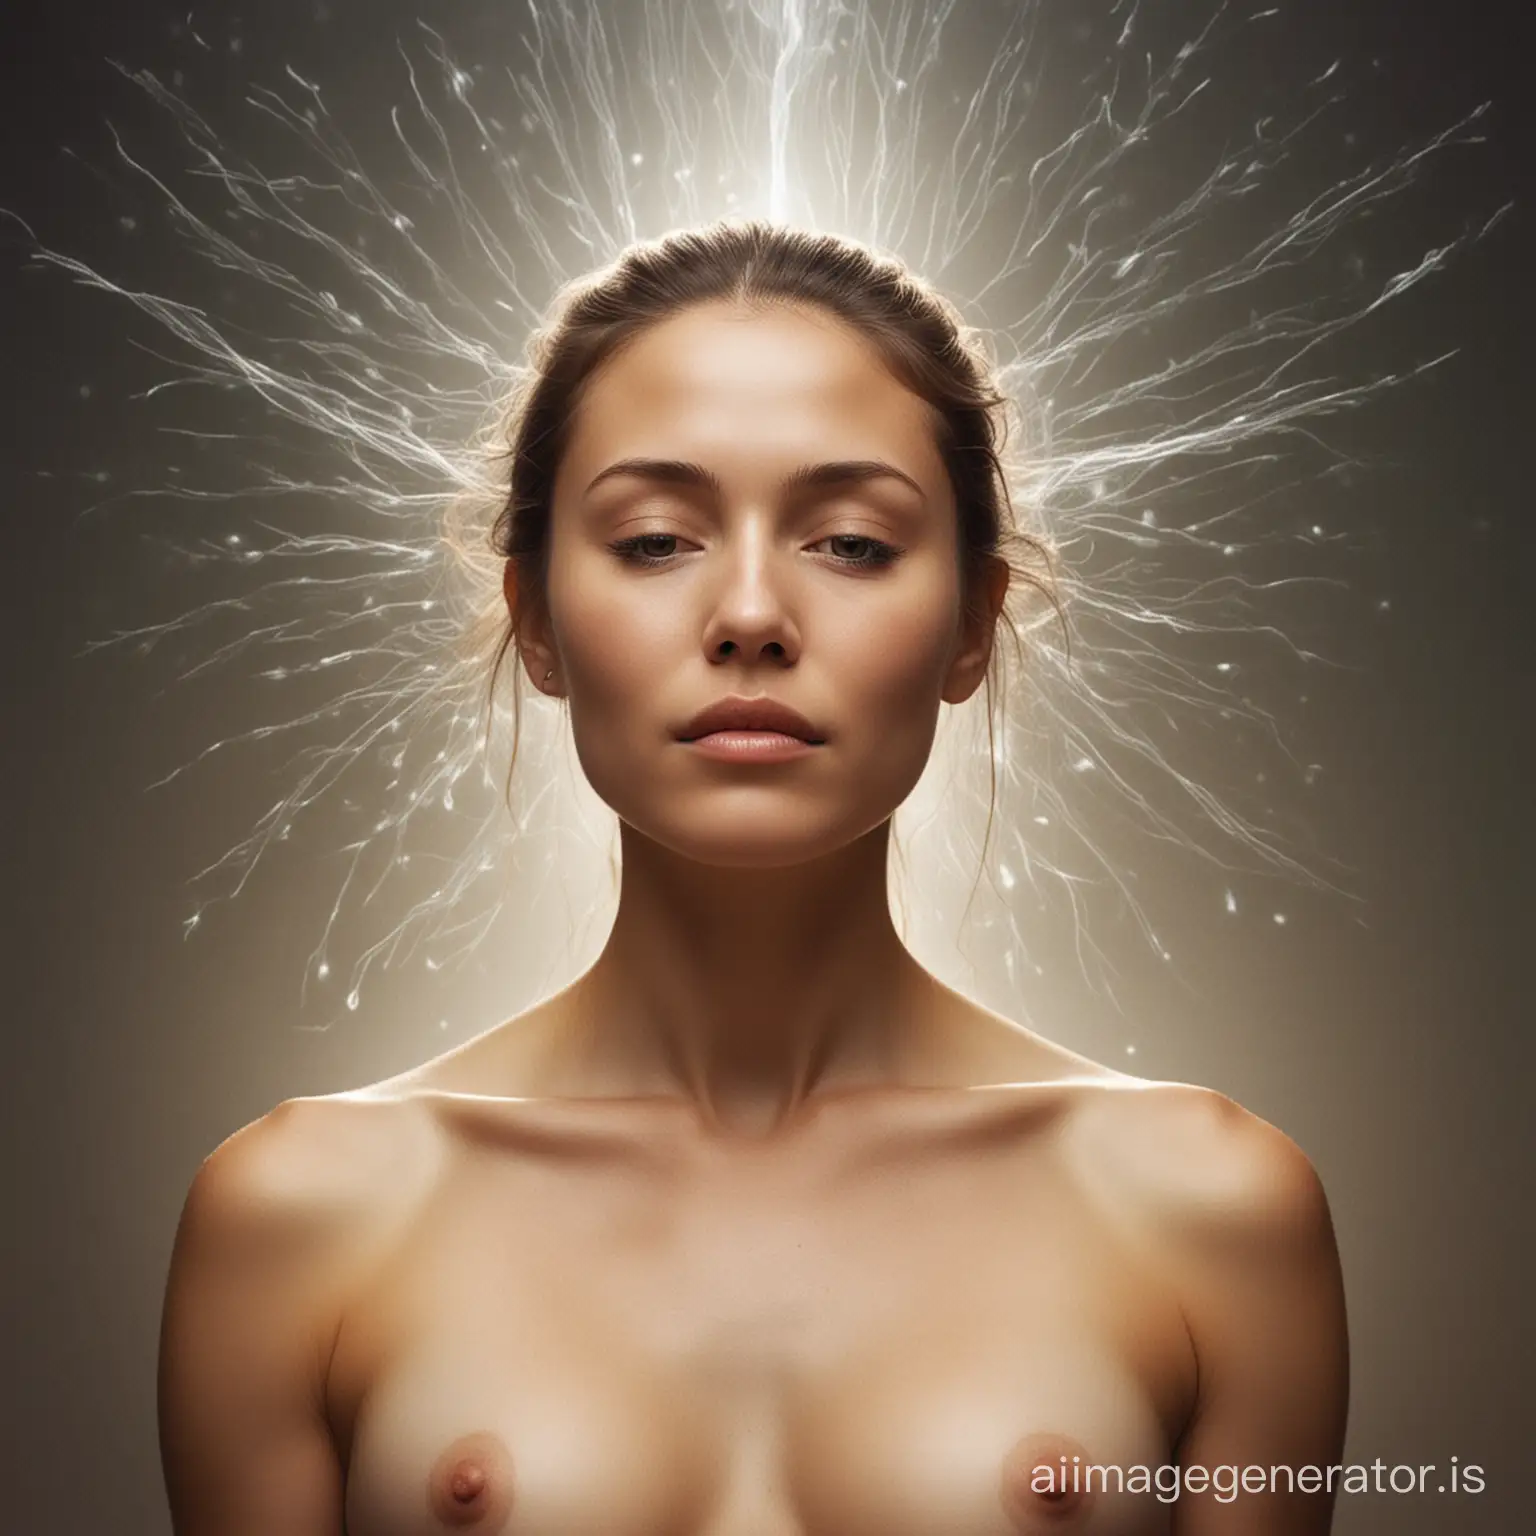 Embodied-Spirituality-Human-Figure-Amid-Ethereal-Aura